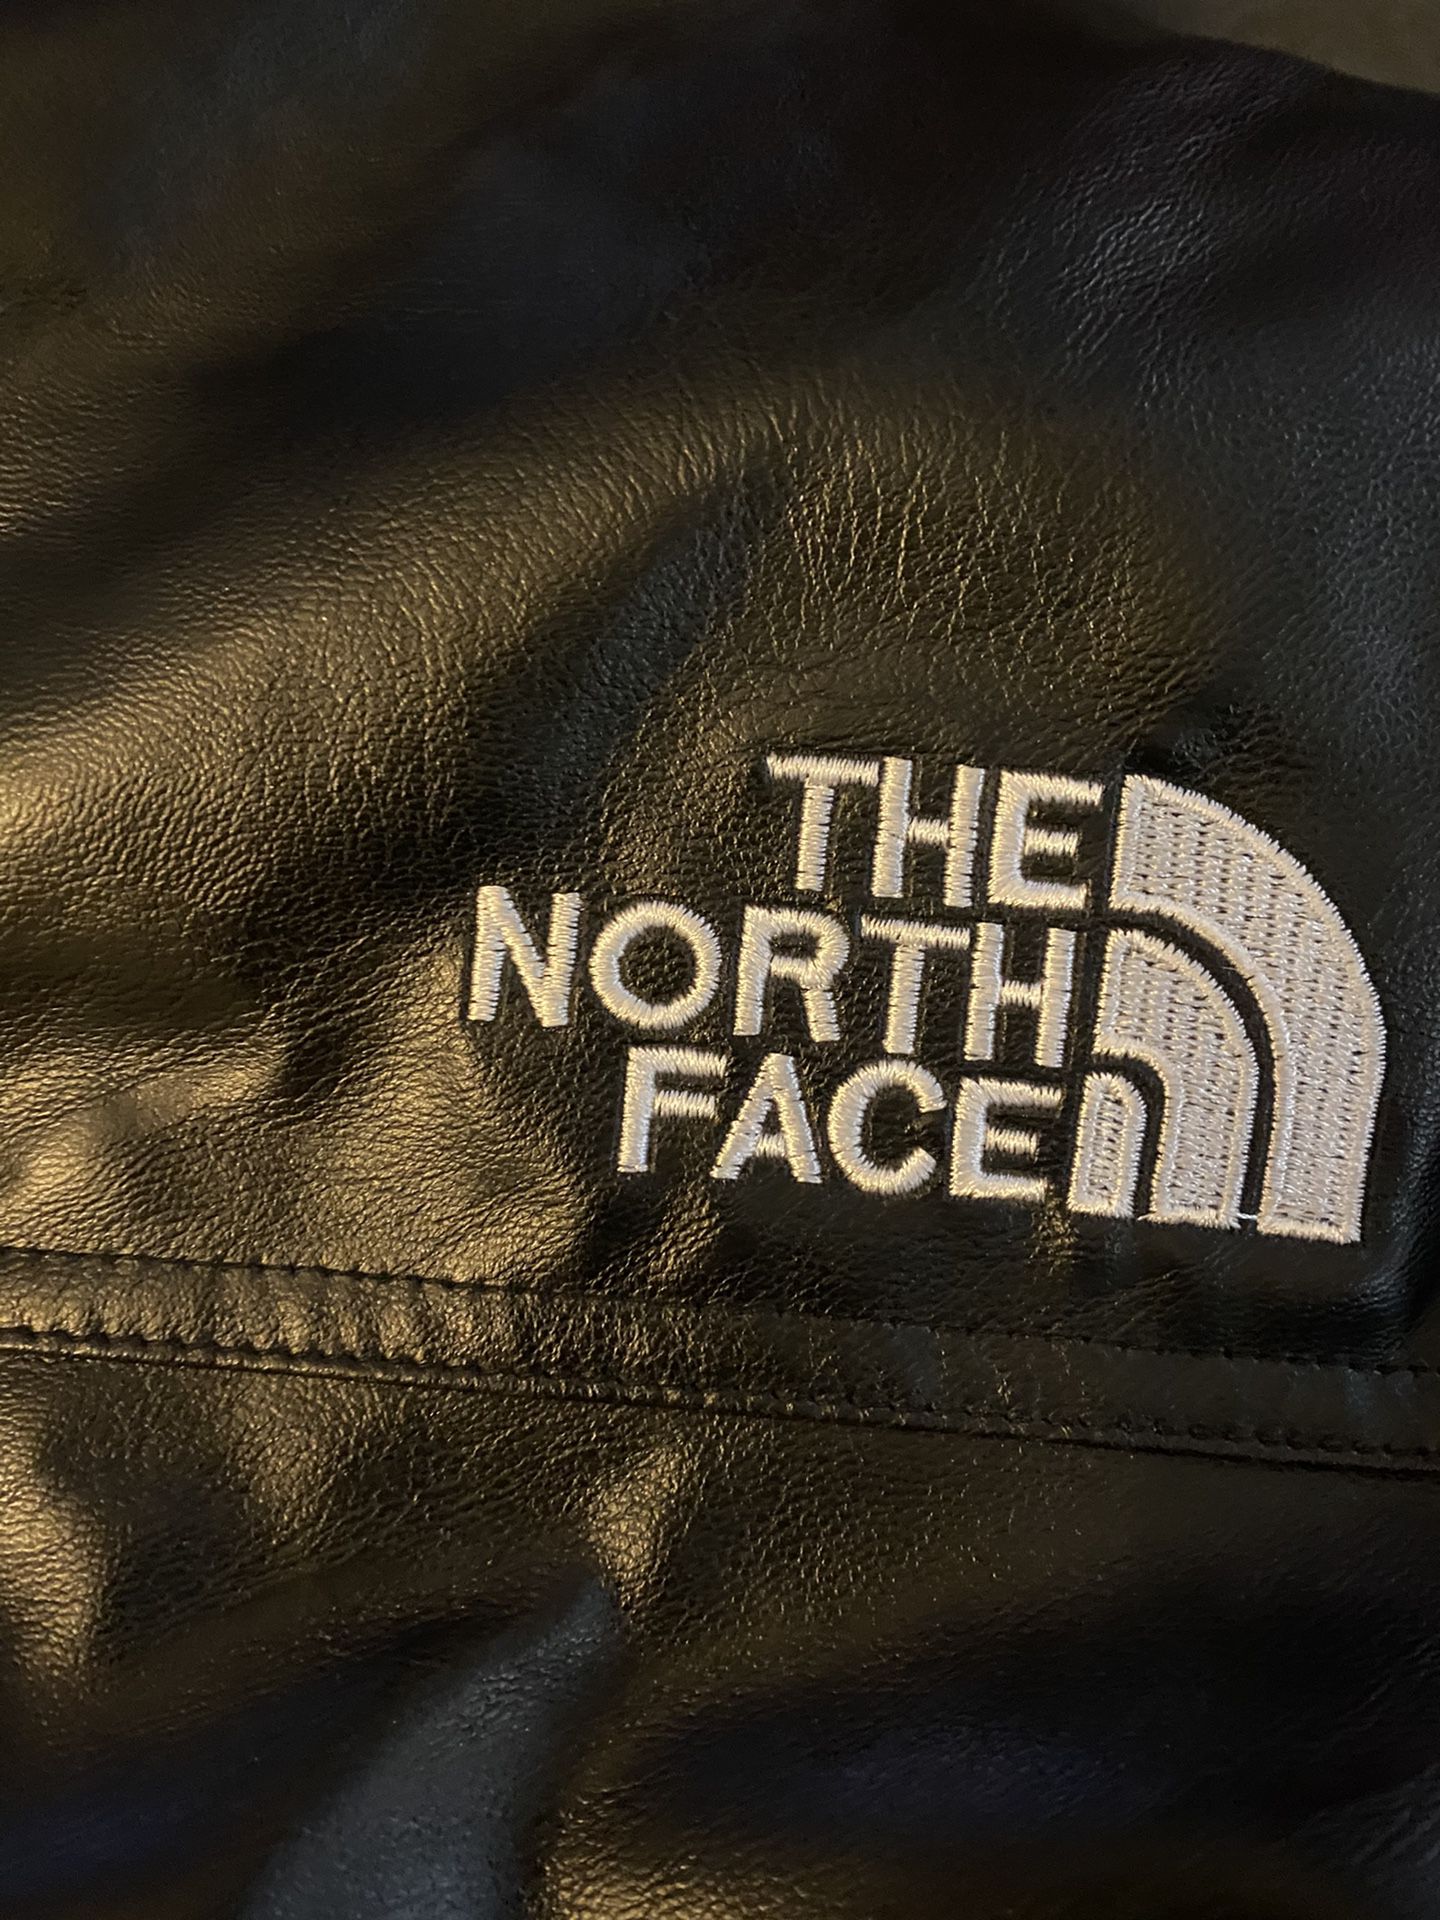 The Northface supreme